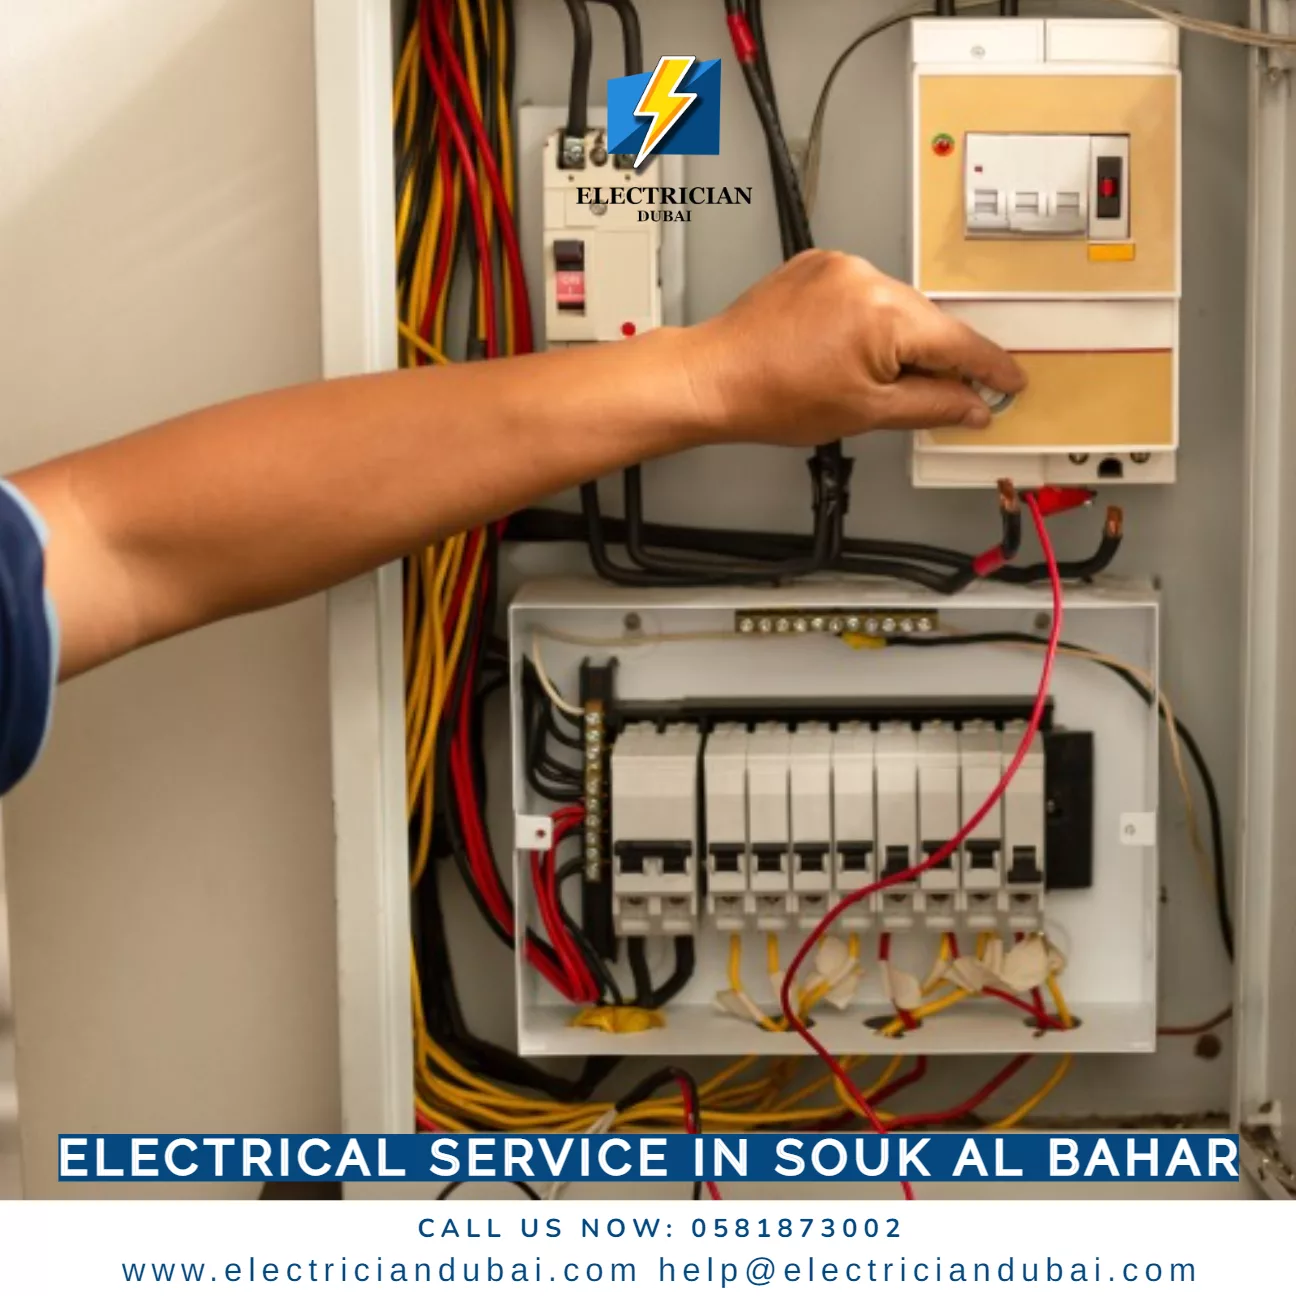 Electrical Service in Souk Al Bahar